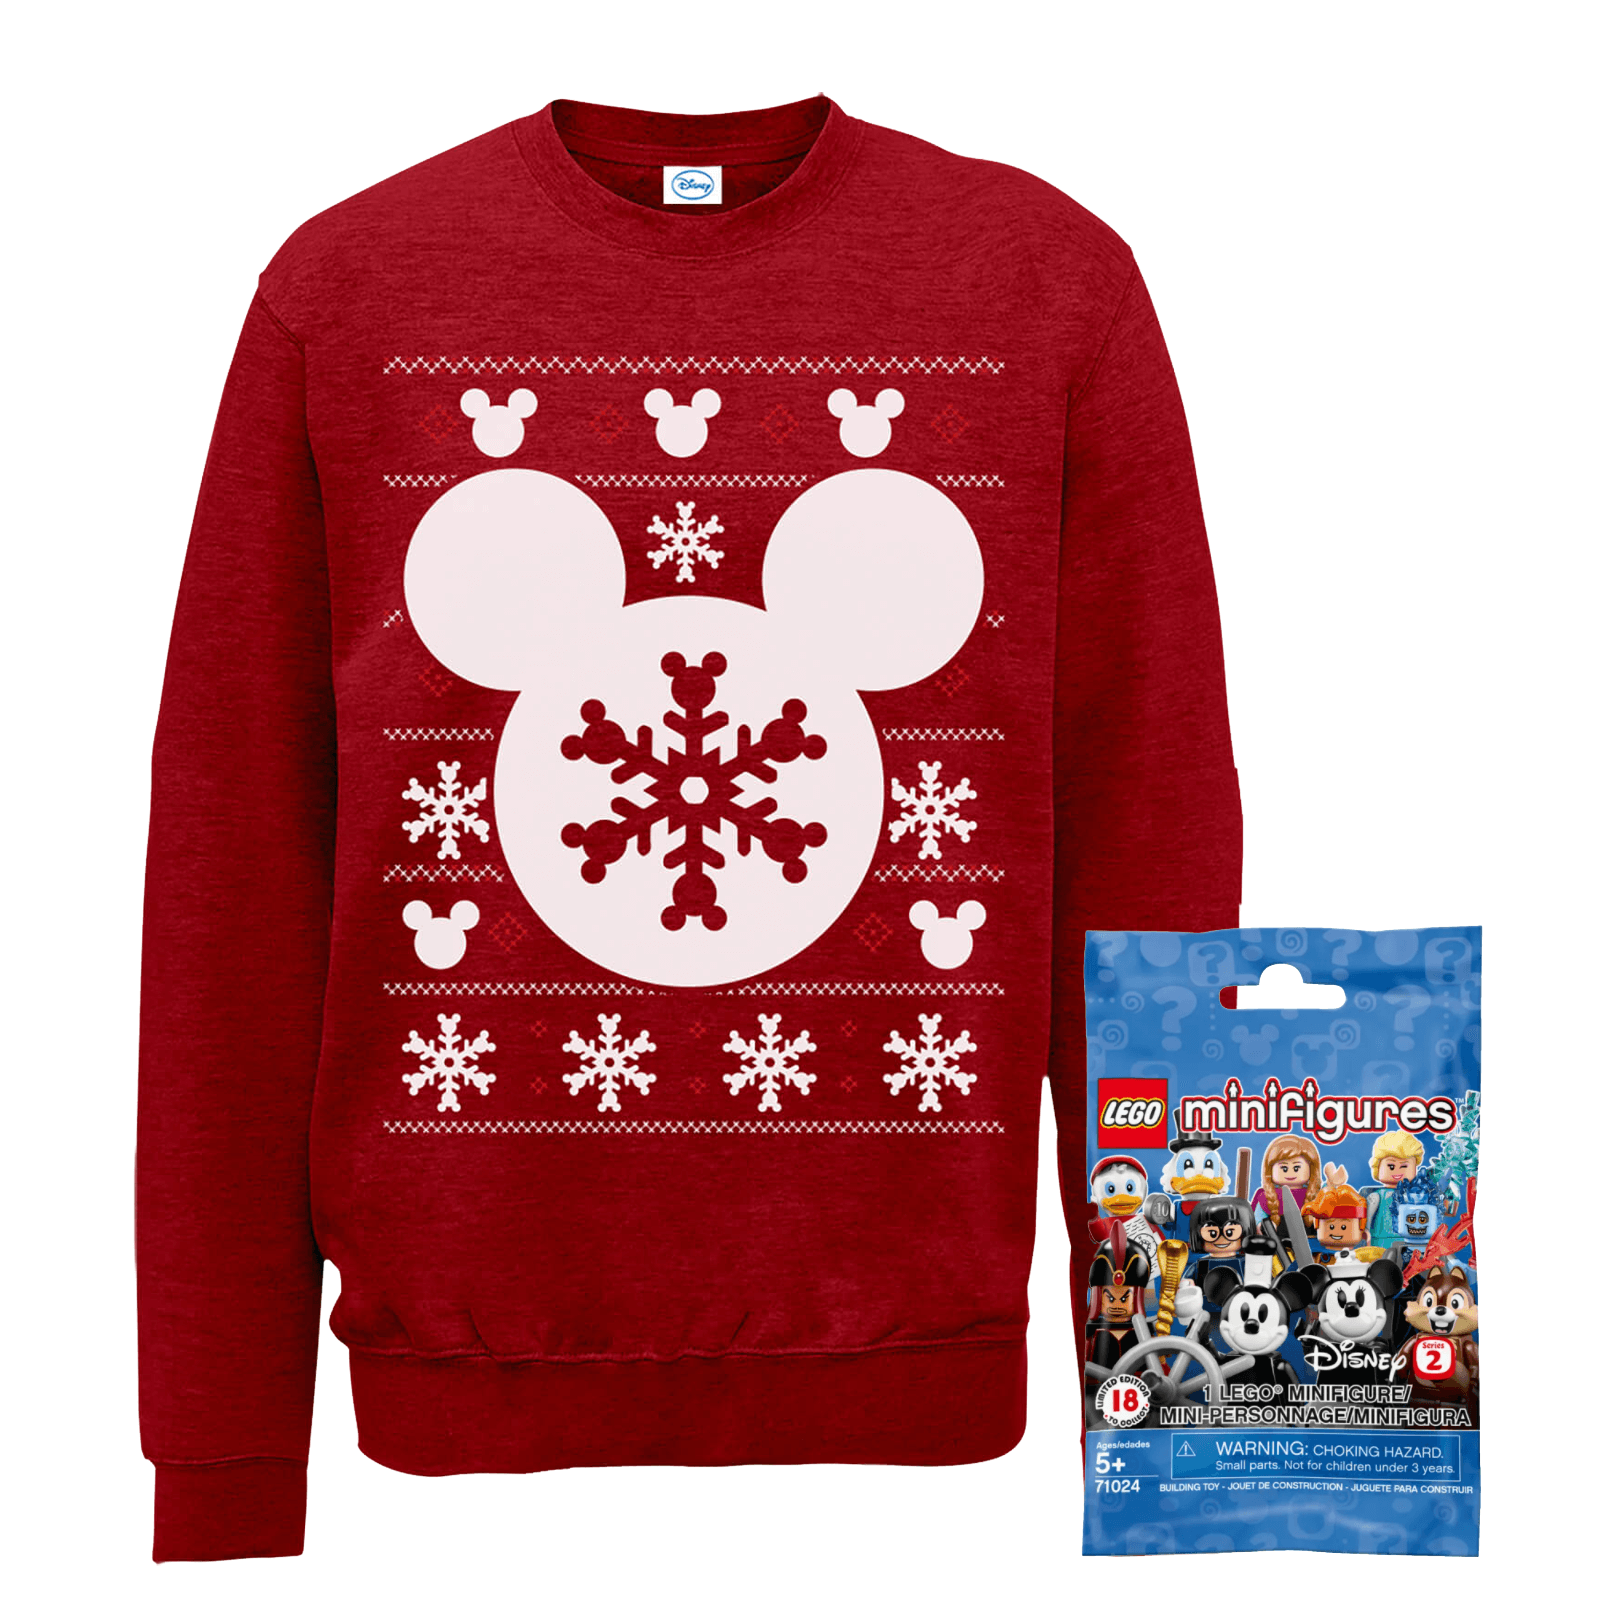 Disney Christmas Sweatshirt & Lego Minifigure Bundle - Unisex - L von Disney